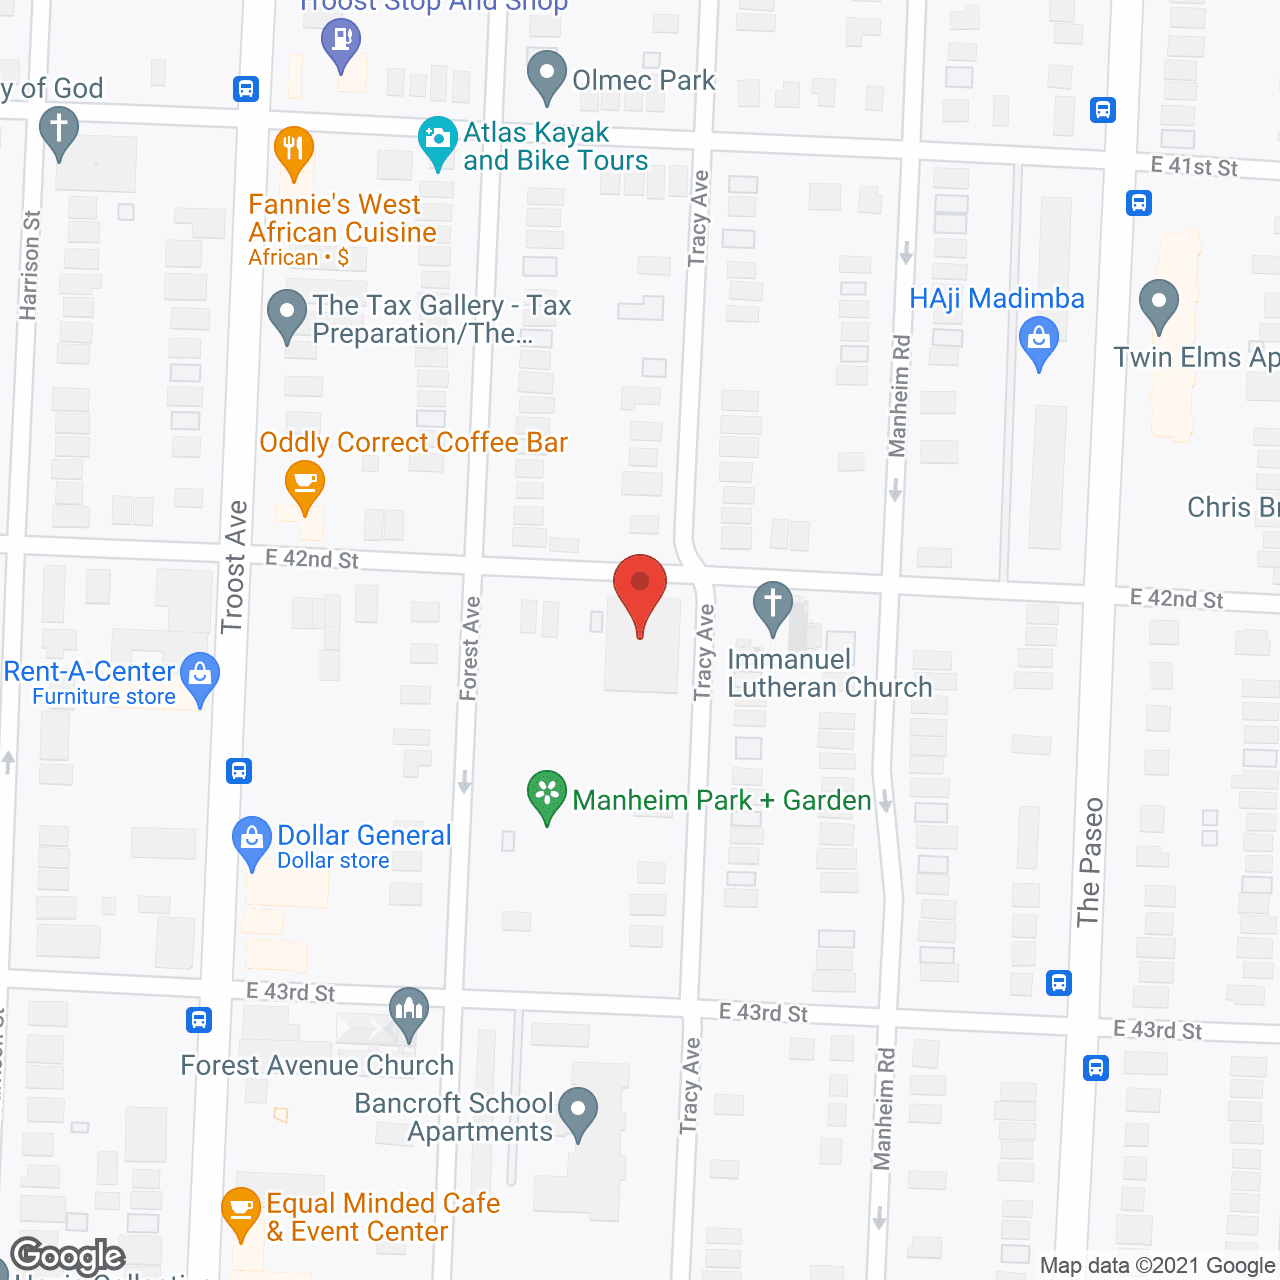 Immanuel Manor in google map